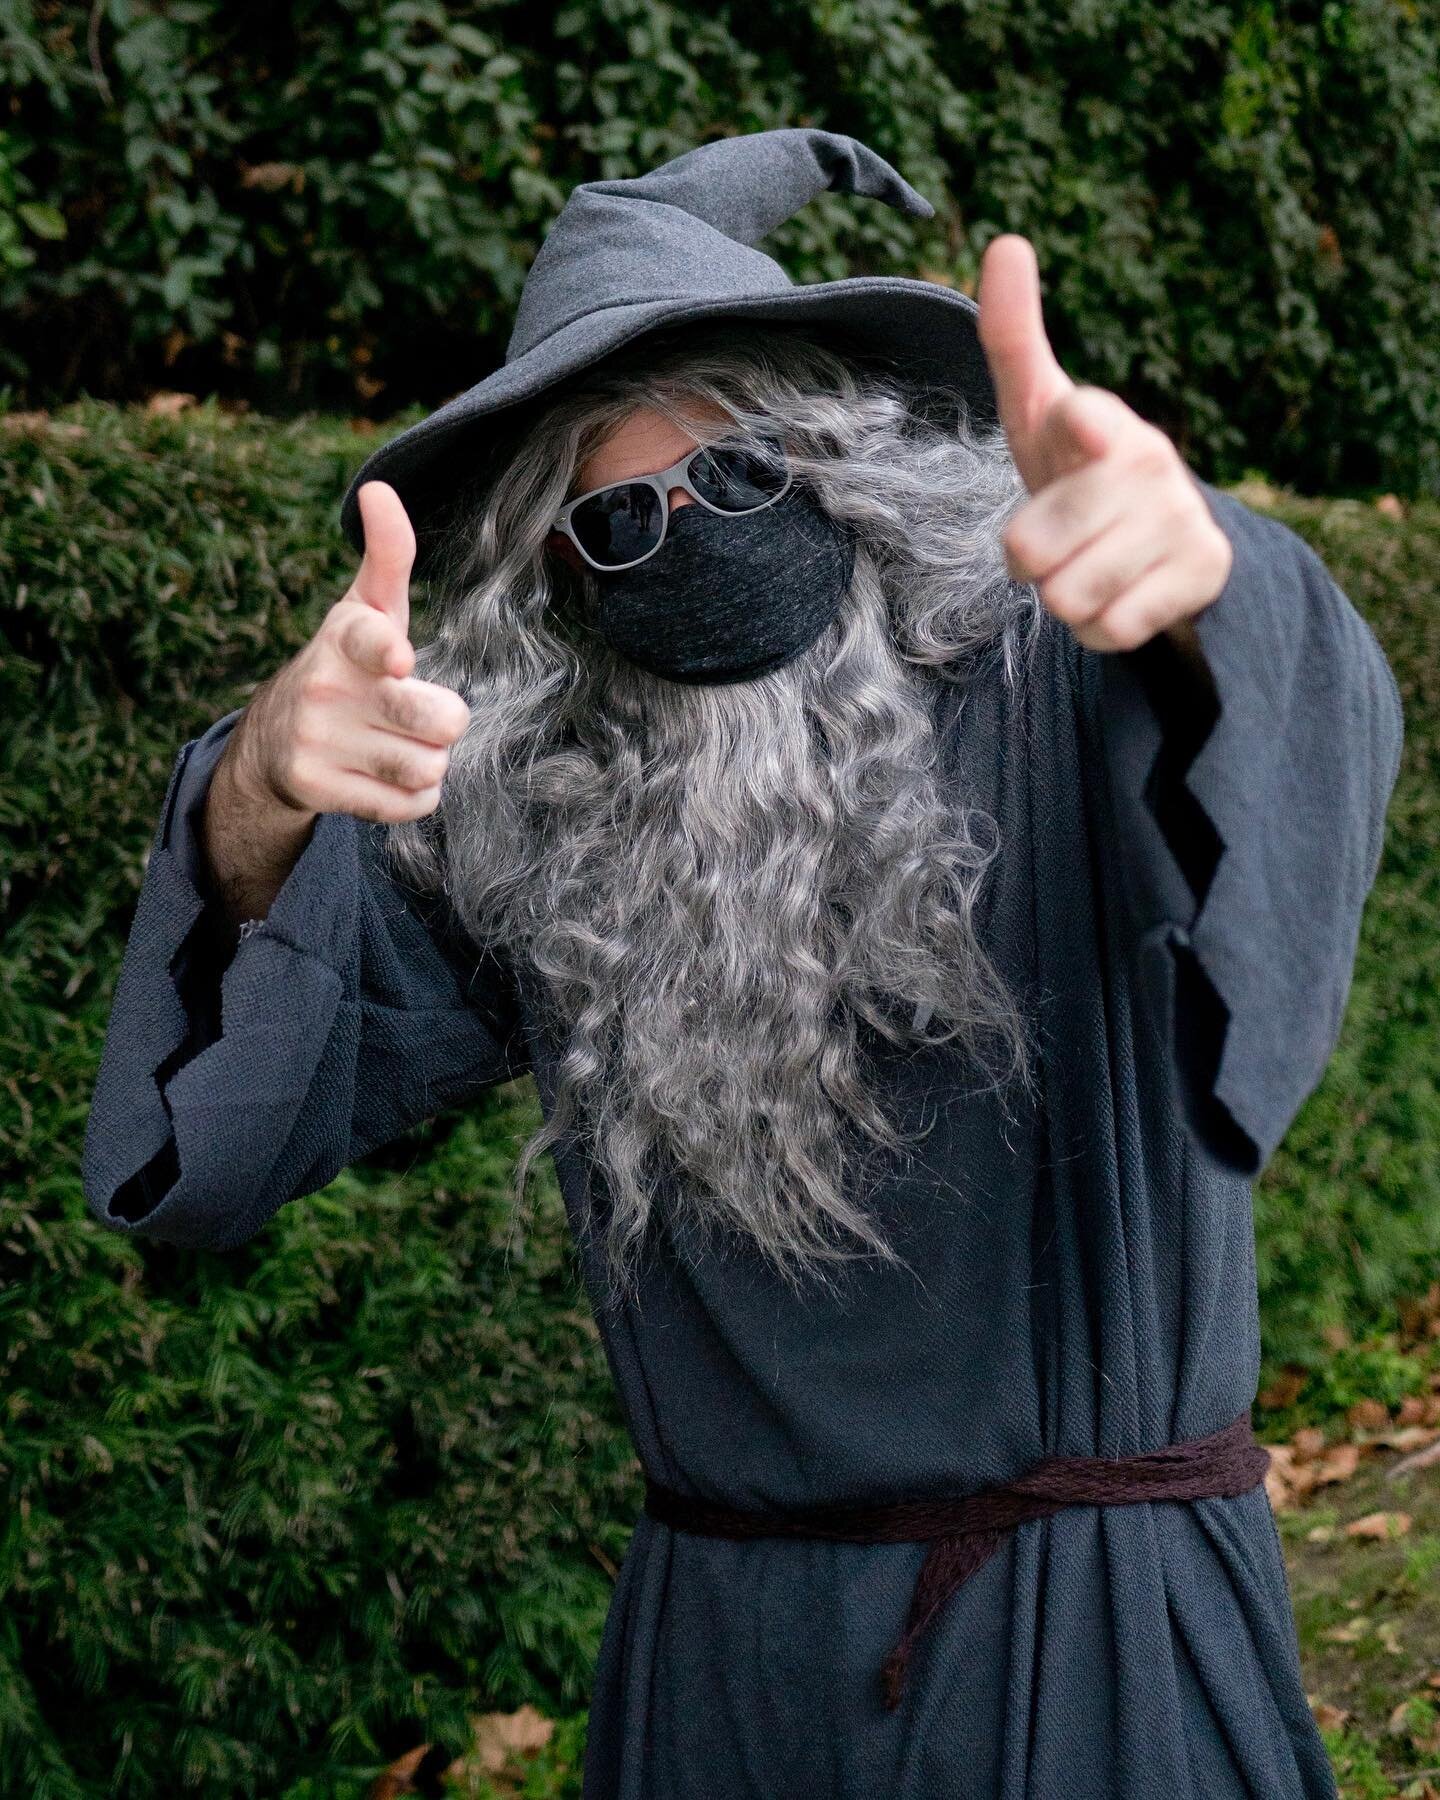 Yo, Gandalf says wearing masks are cool!! Protecting the people of (M̶i̶d̶d̶l̶e̶) Earth has never been easier! Happy Halloween.